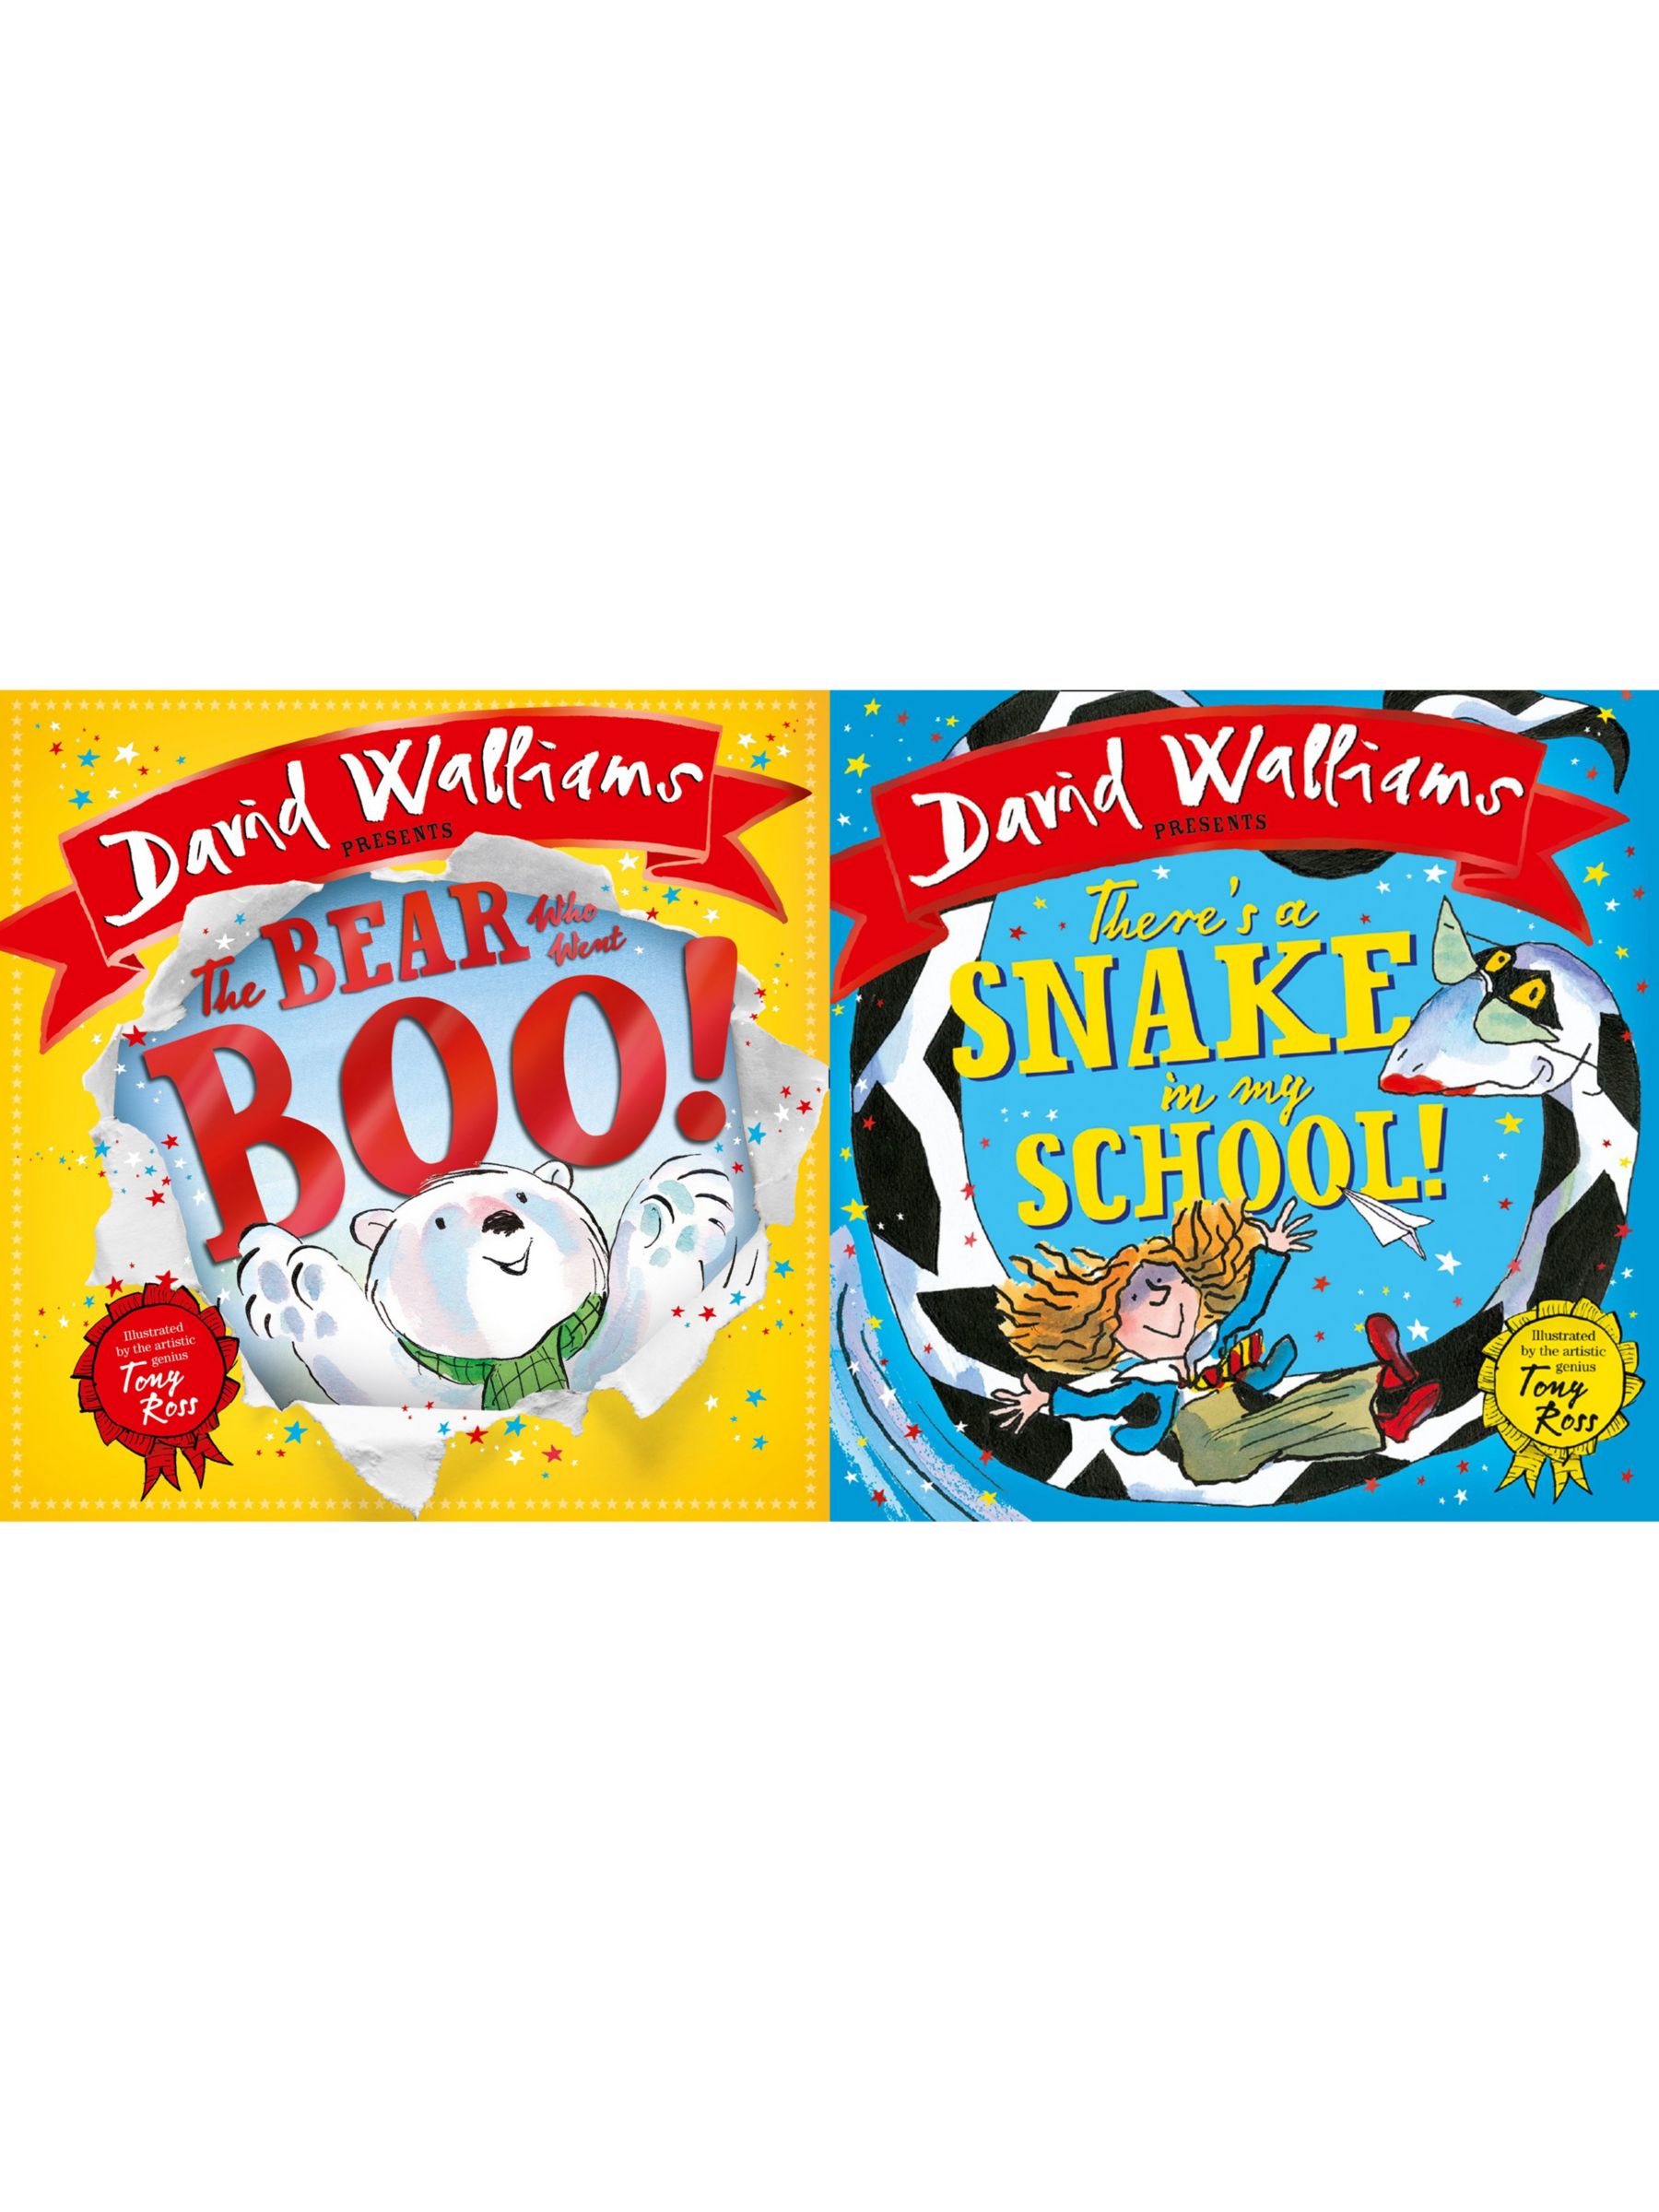 david walliams children's books in order